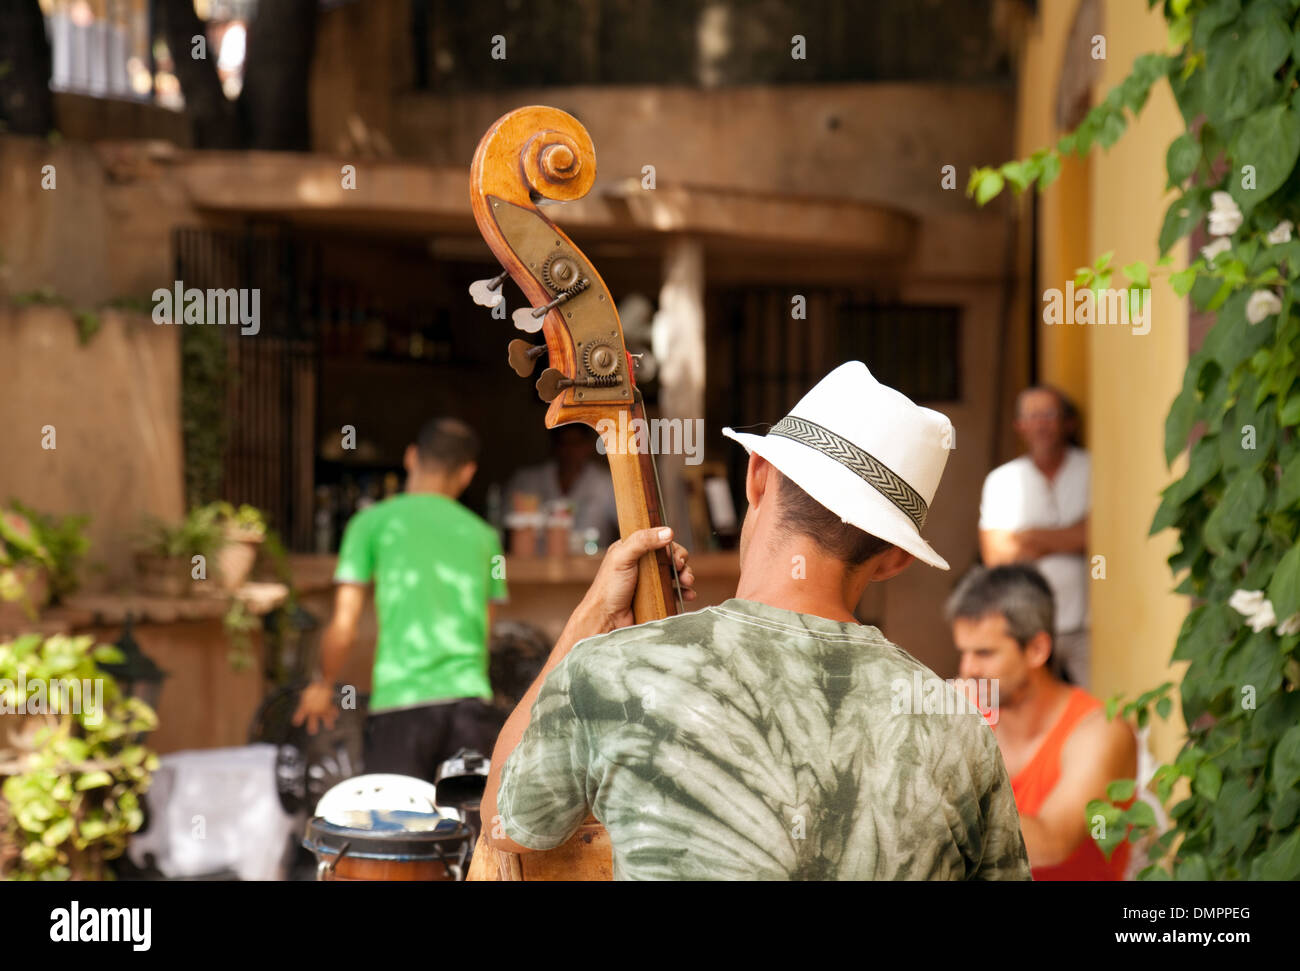 A double bass player playing music in a bar, Trinidad, Cuba, Caribbean, Latin America Stock Photo